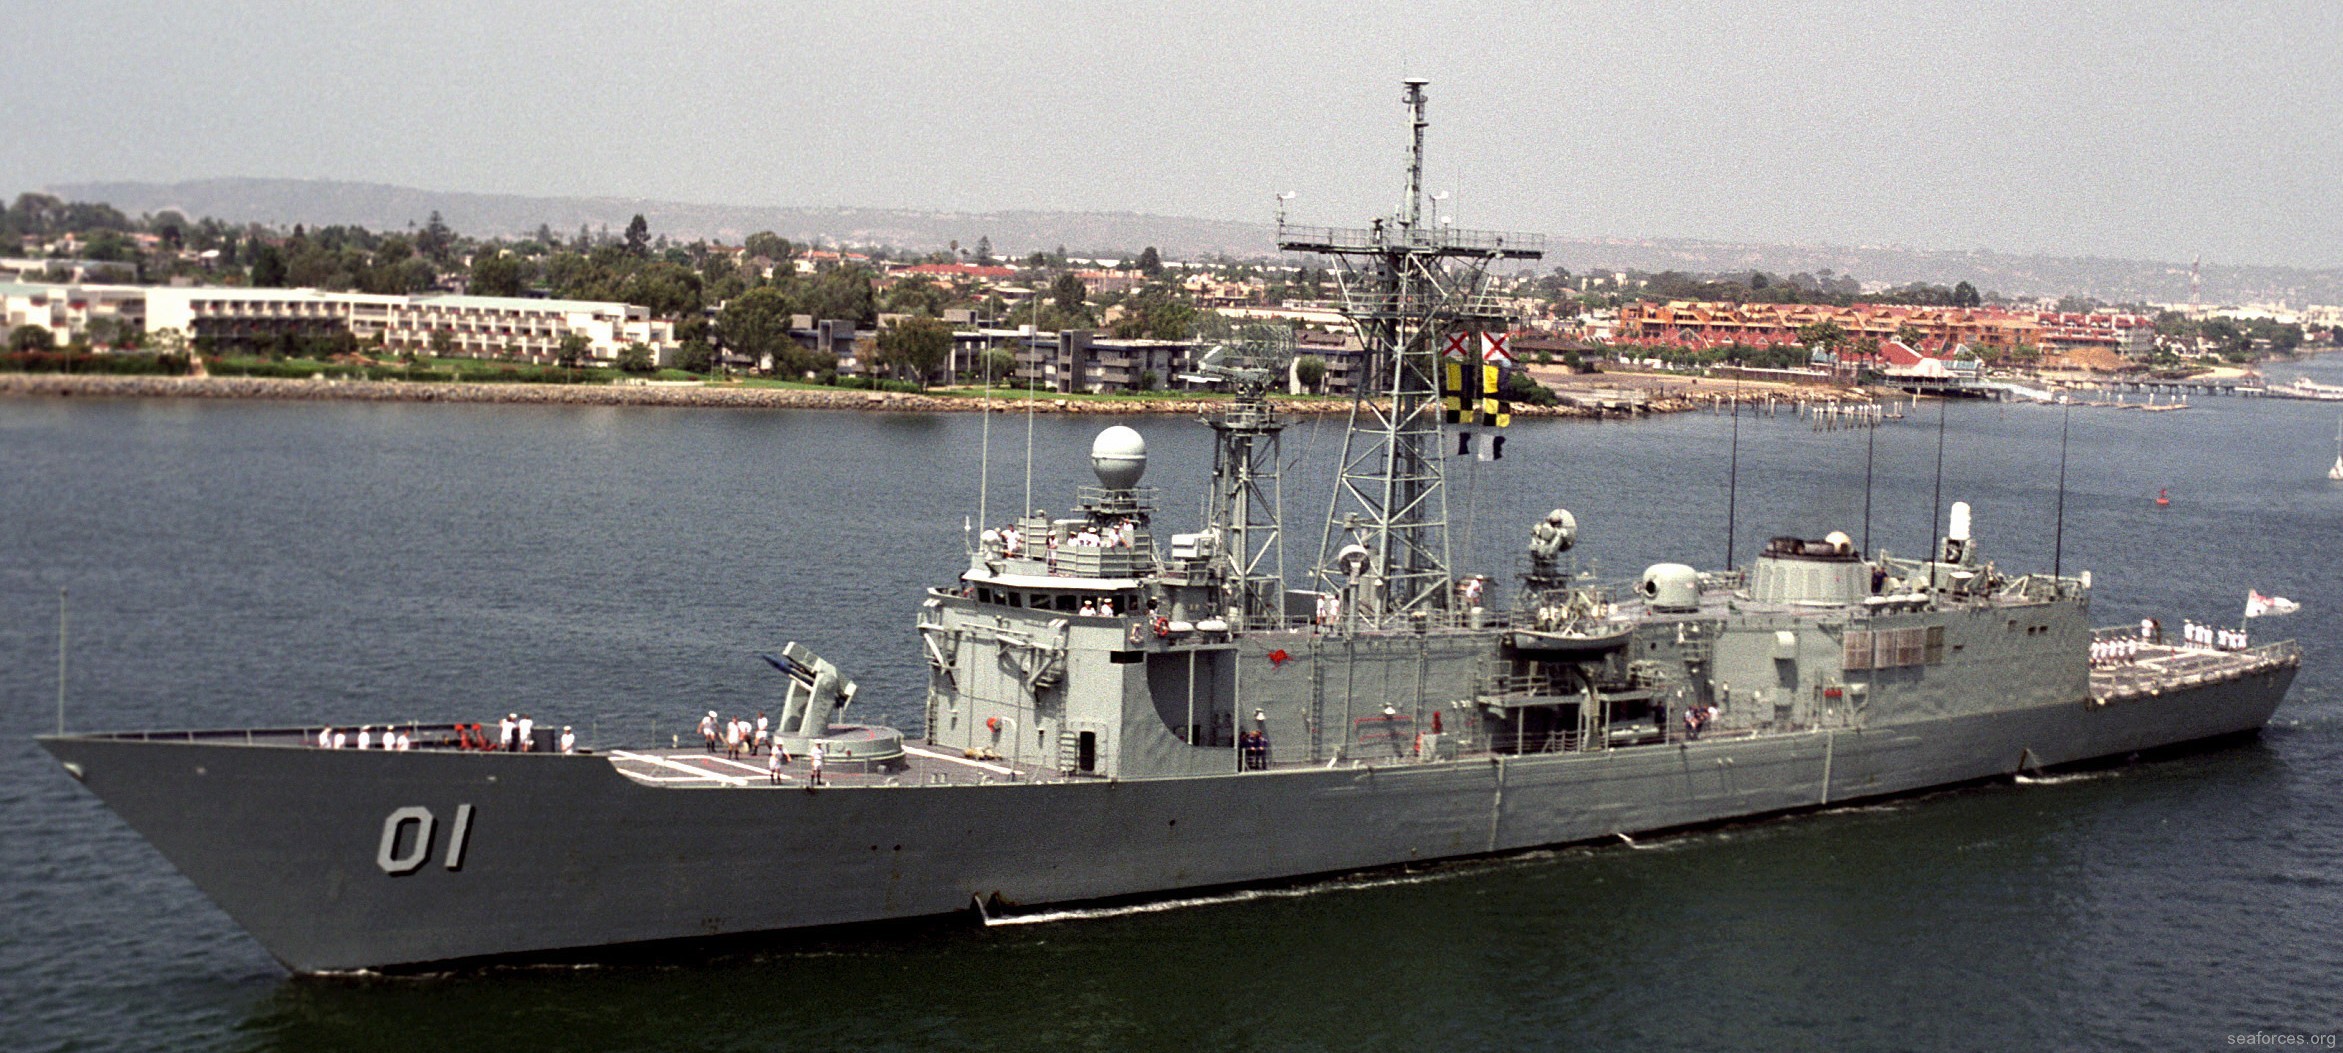 hmas adelaide ffg-01 guided missile frigate royal australian navy todd shipyards